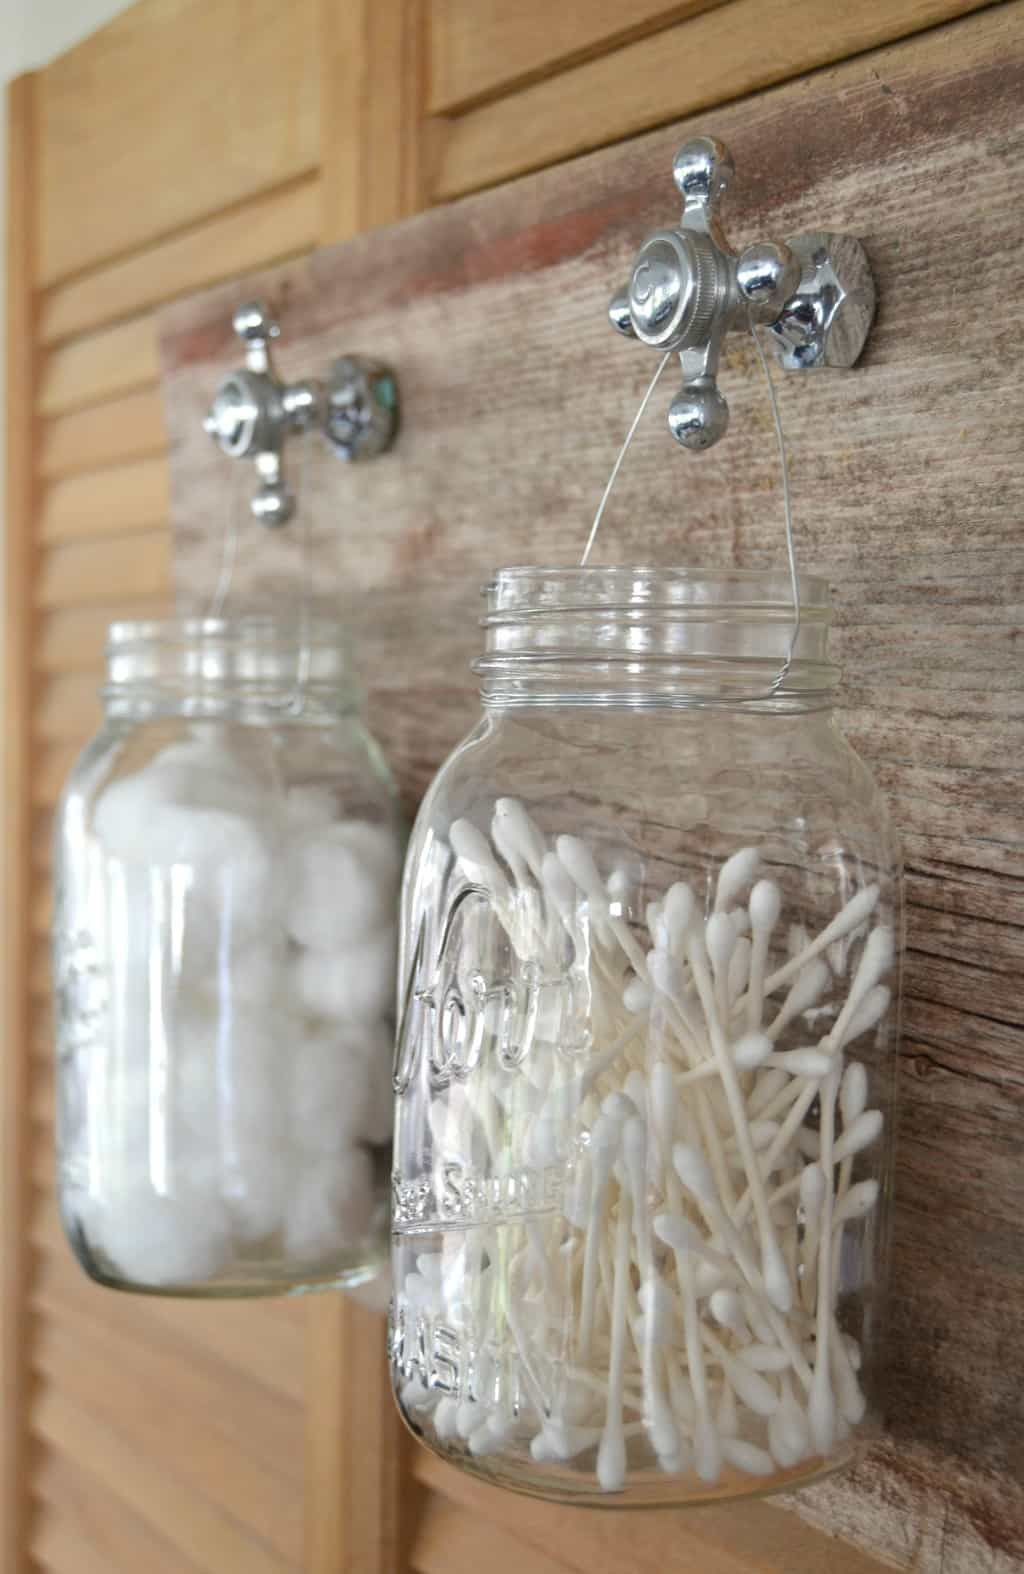 Best ideas about DIY Shower Organizer
. Save or Pin DIY Recycled Bathroom Organizer My Creative Days Now.